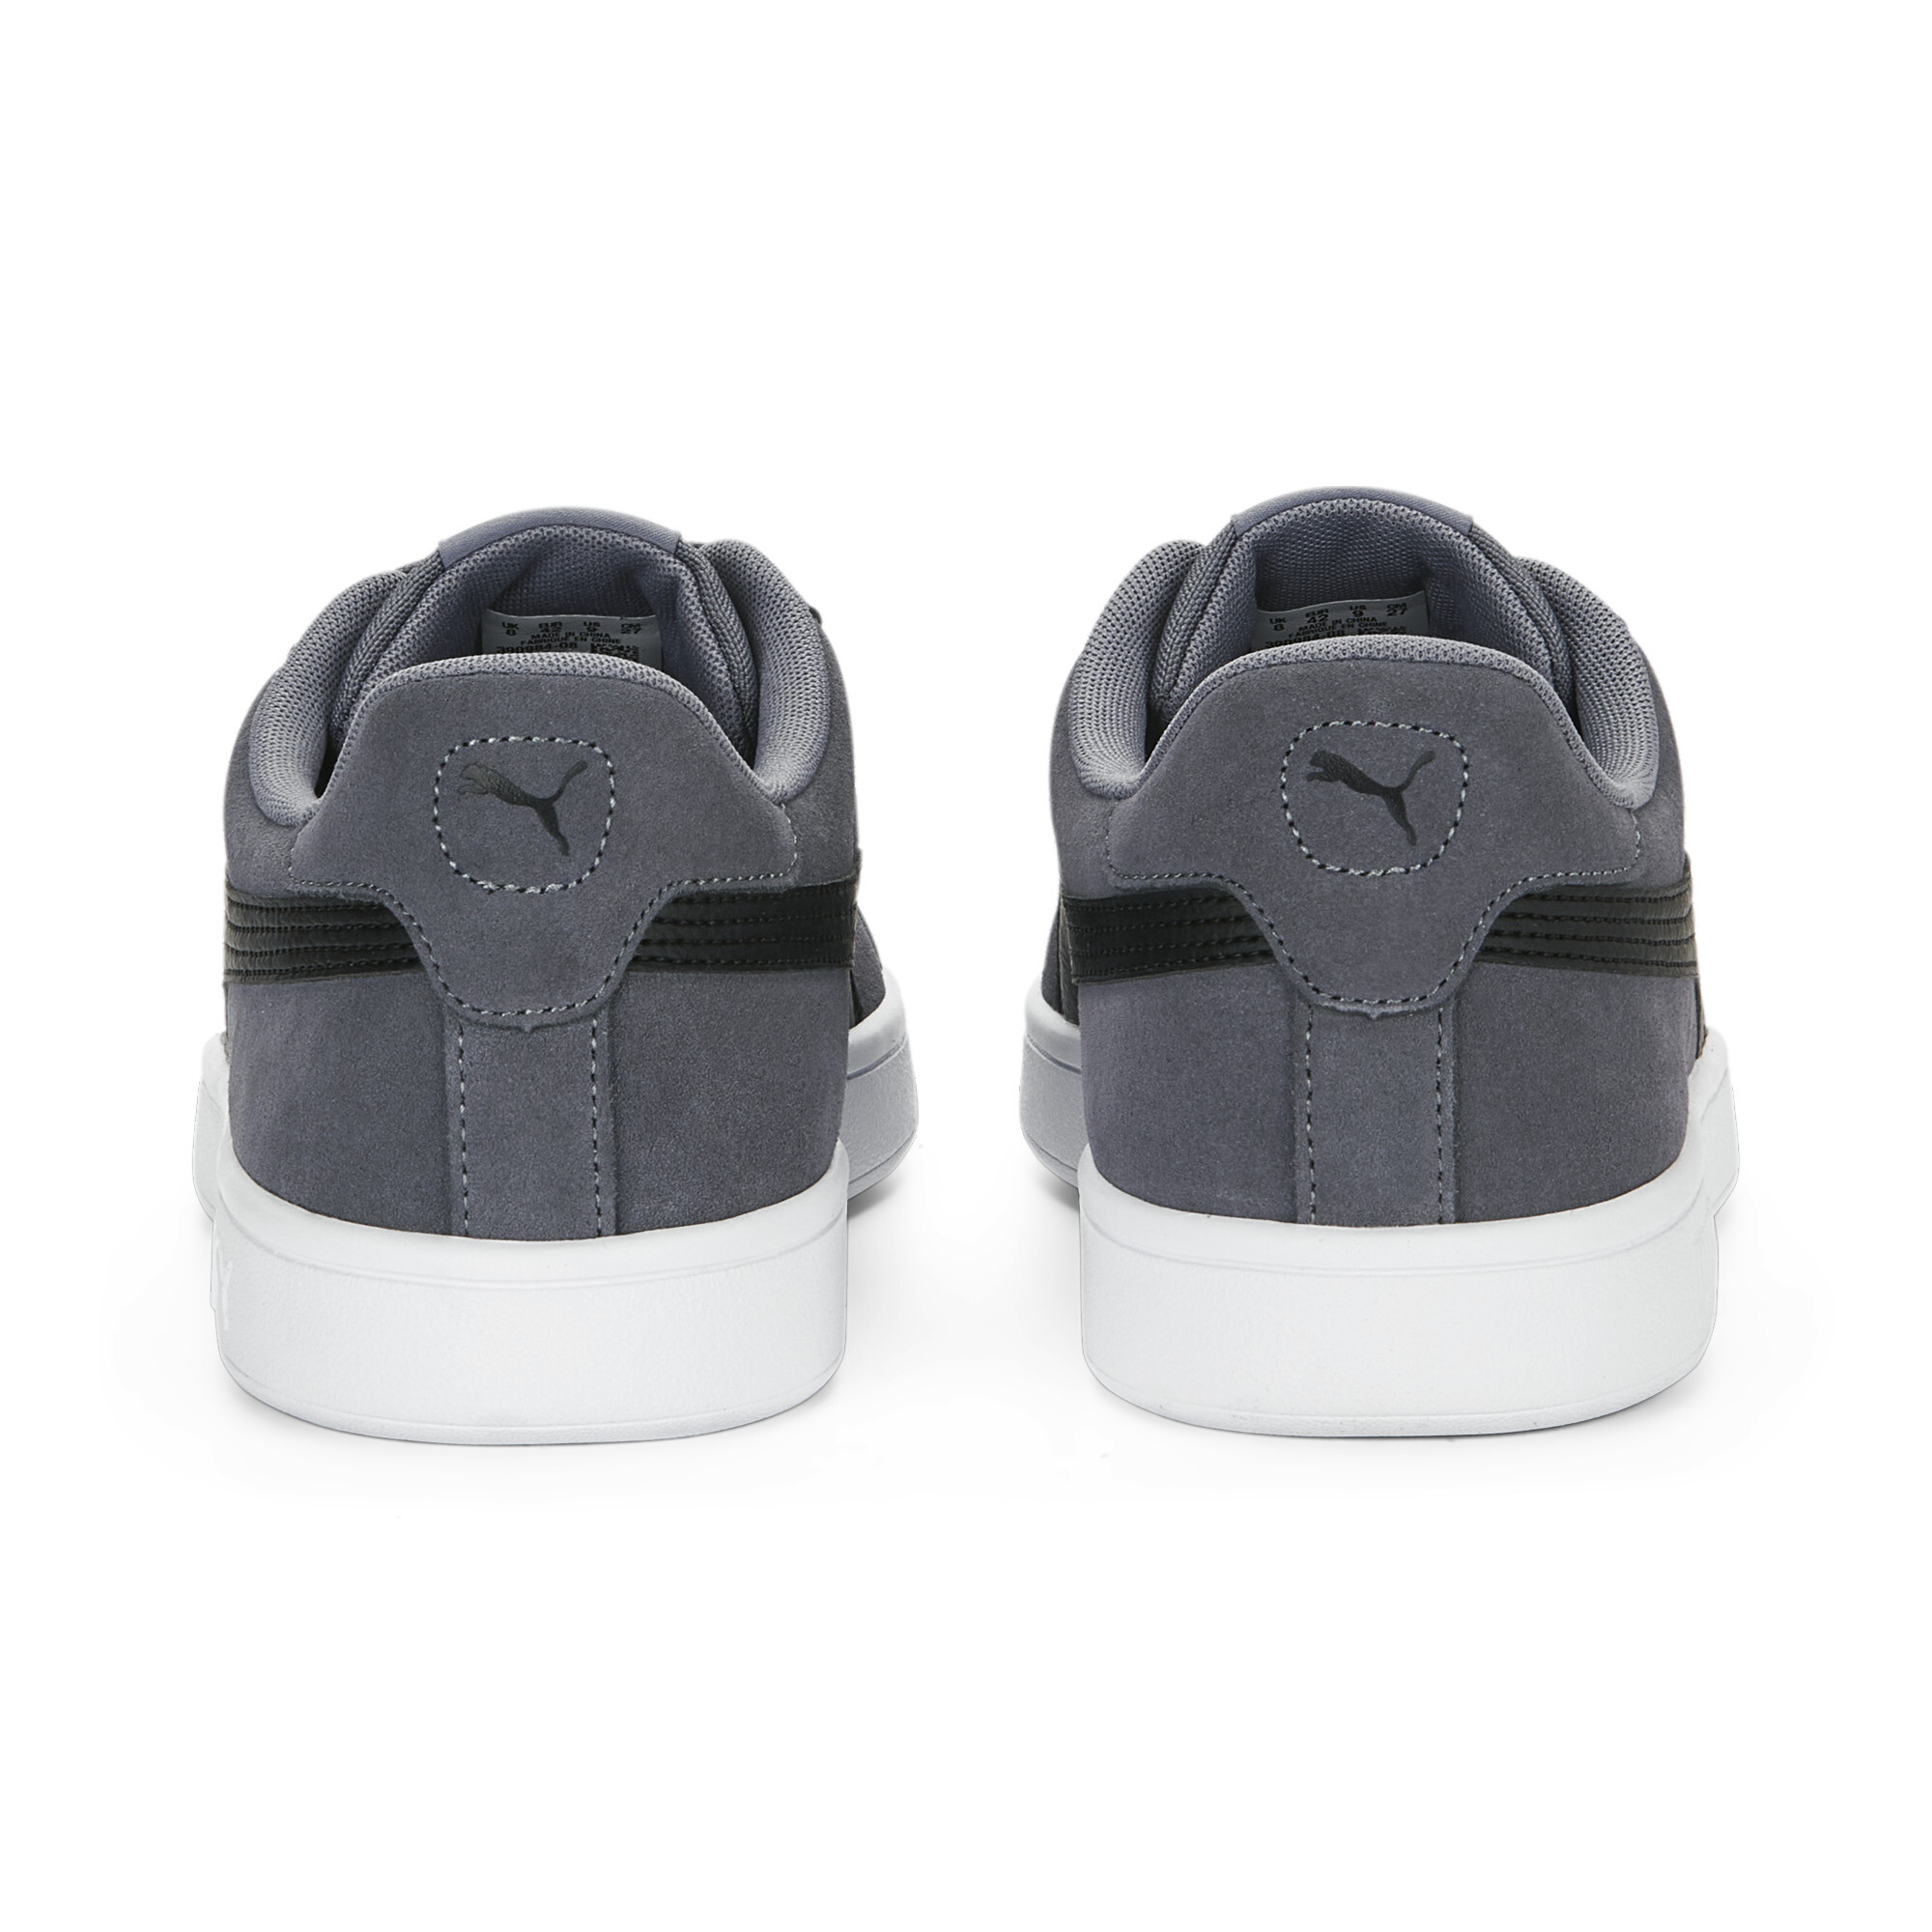 Puma Smash 3.0 Sneakers, Gray, Size 47, Shoes